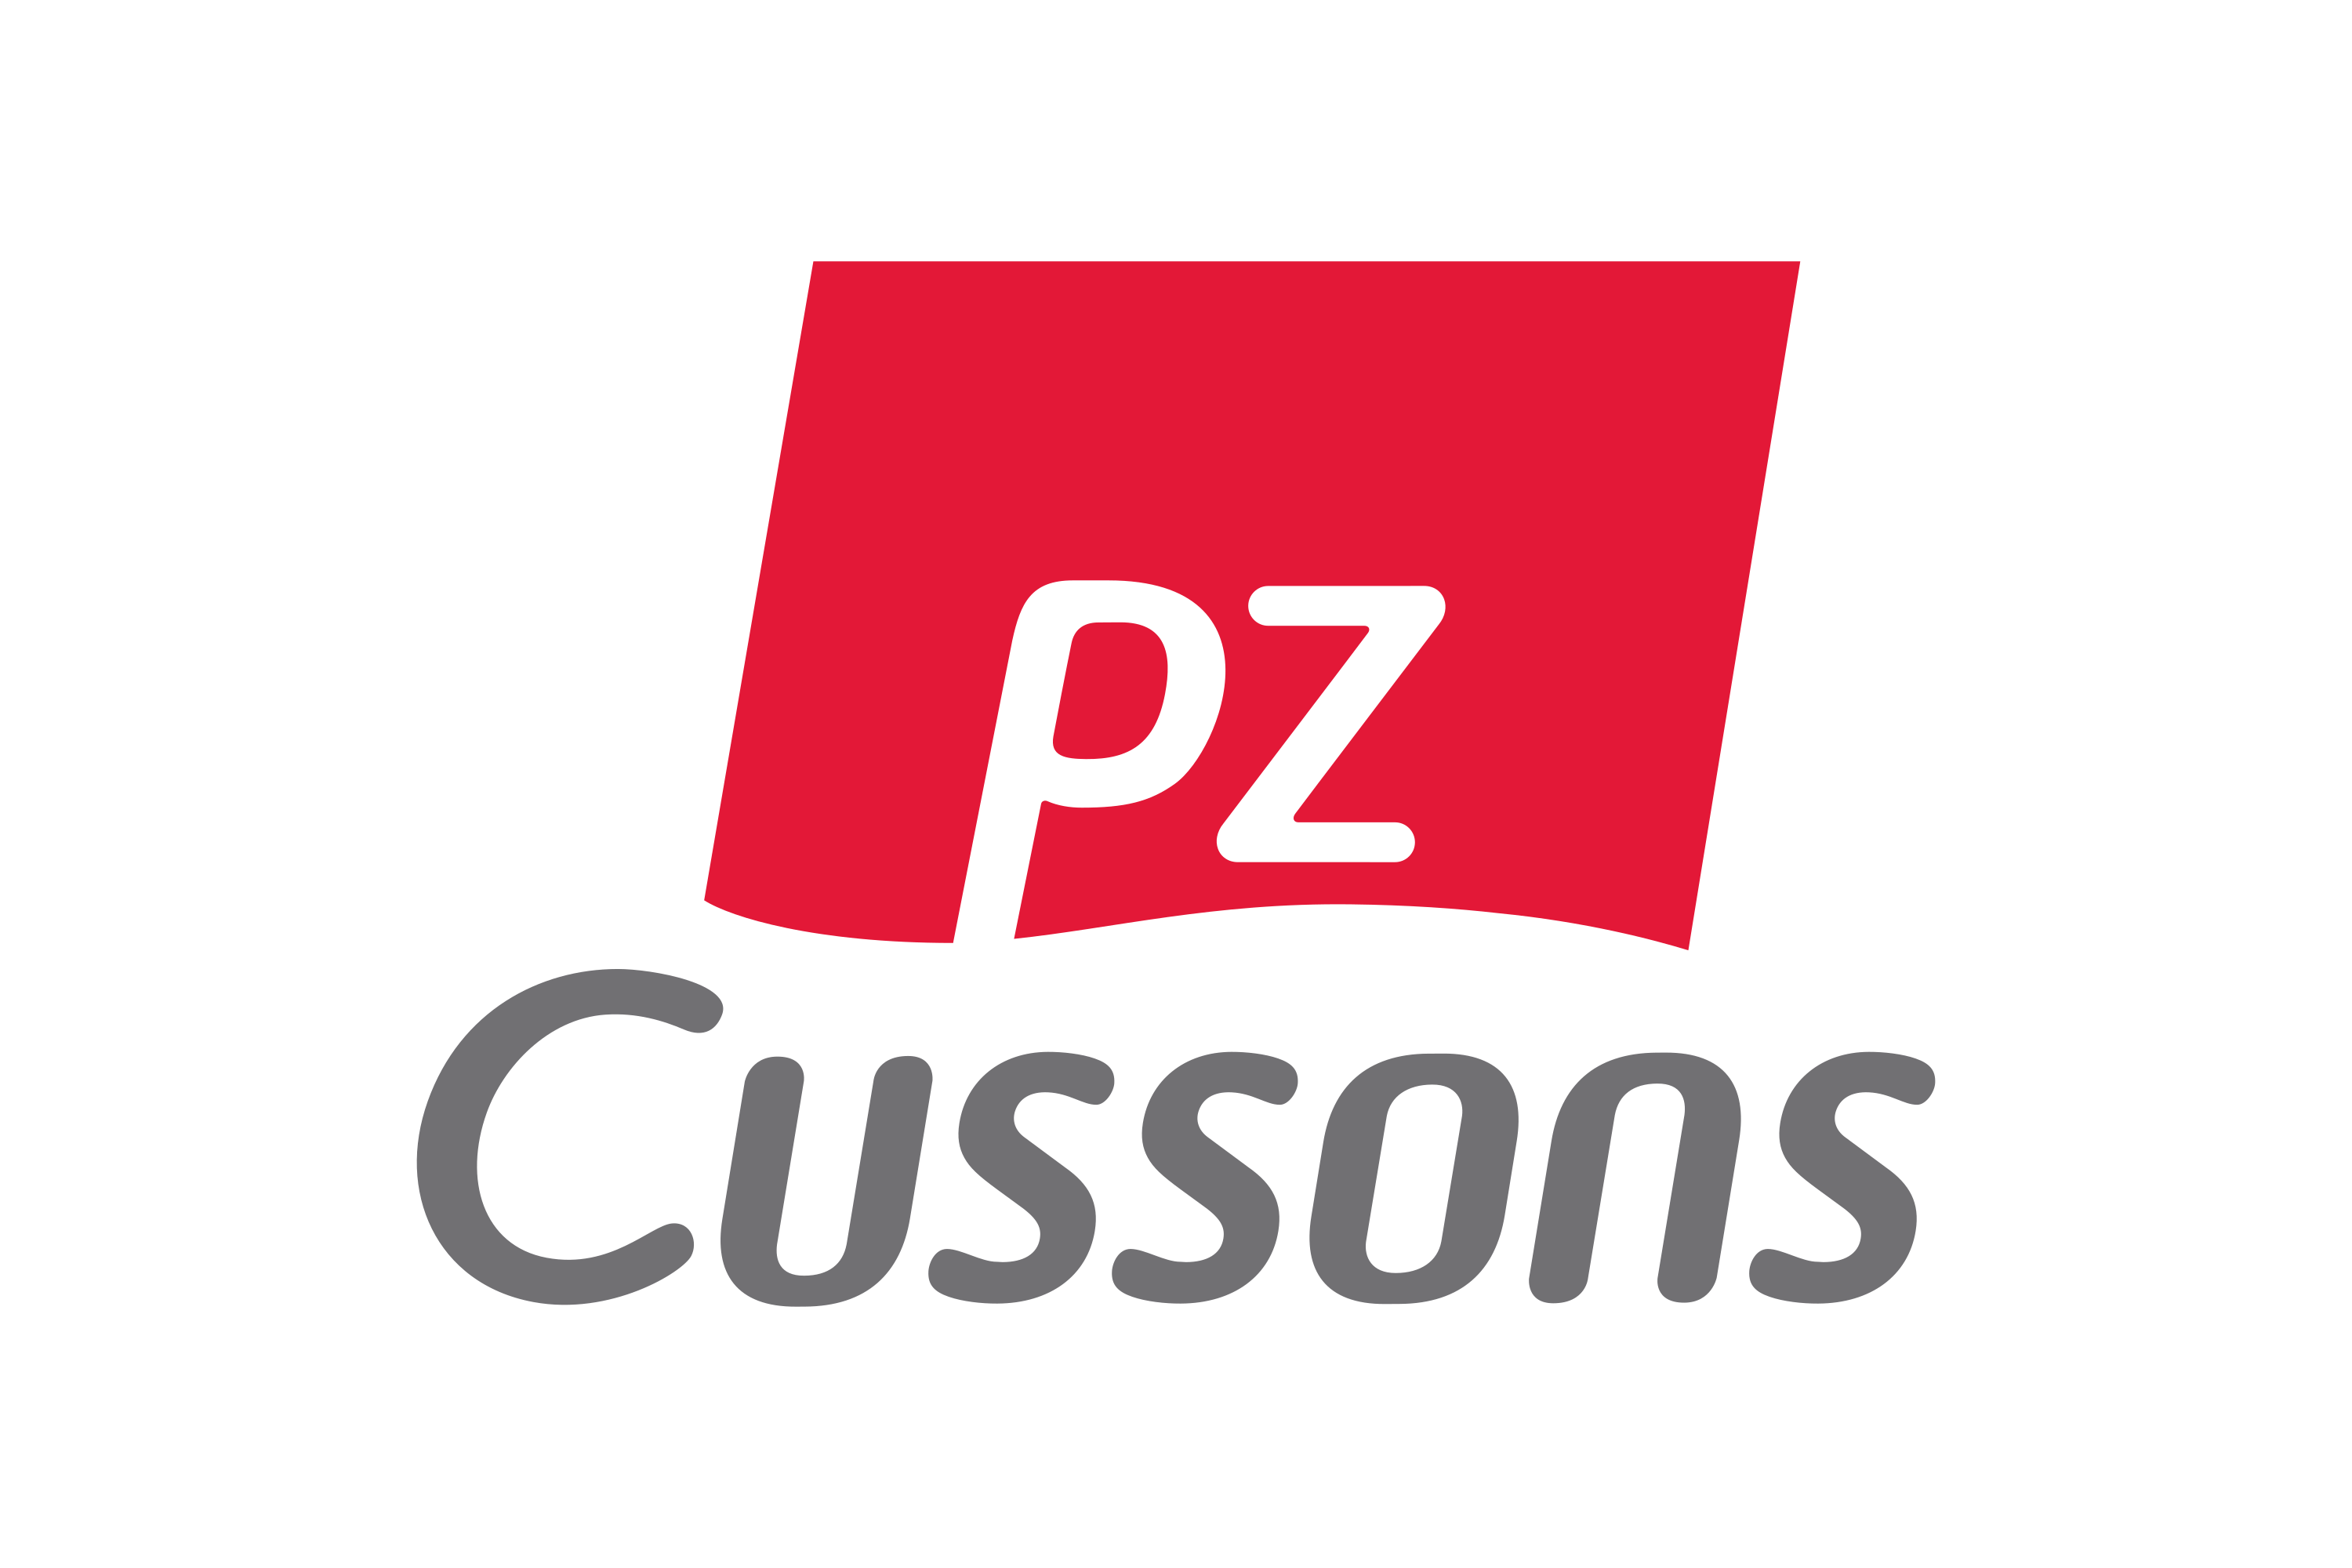 PZ Cussons Logo